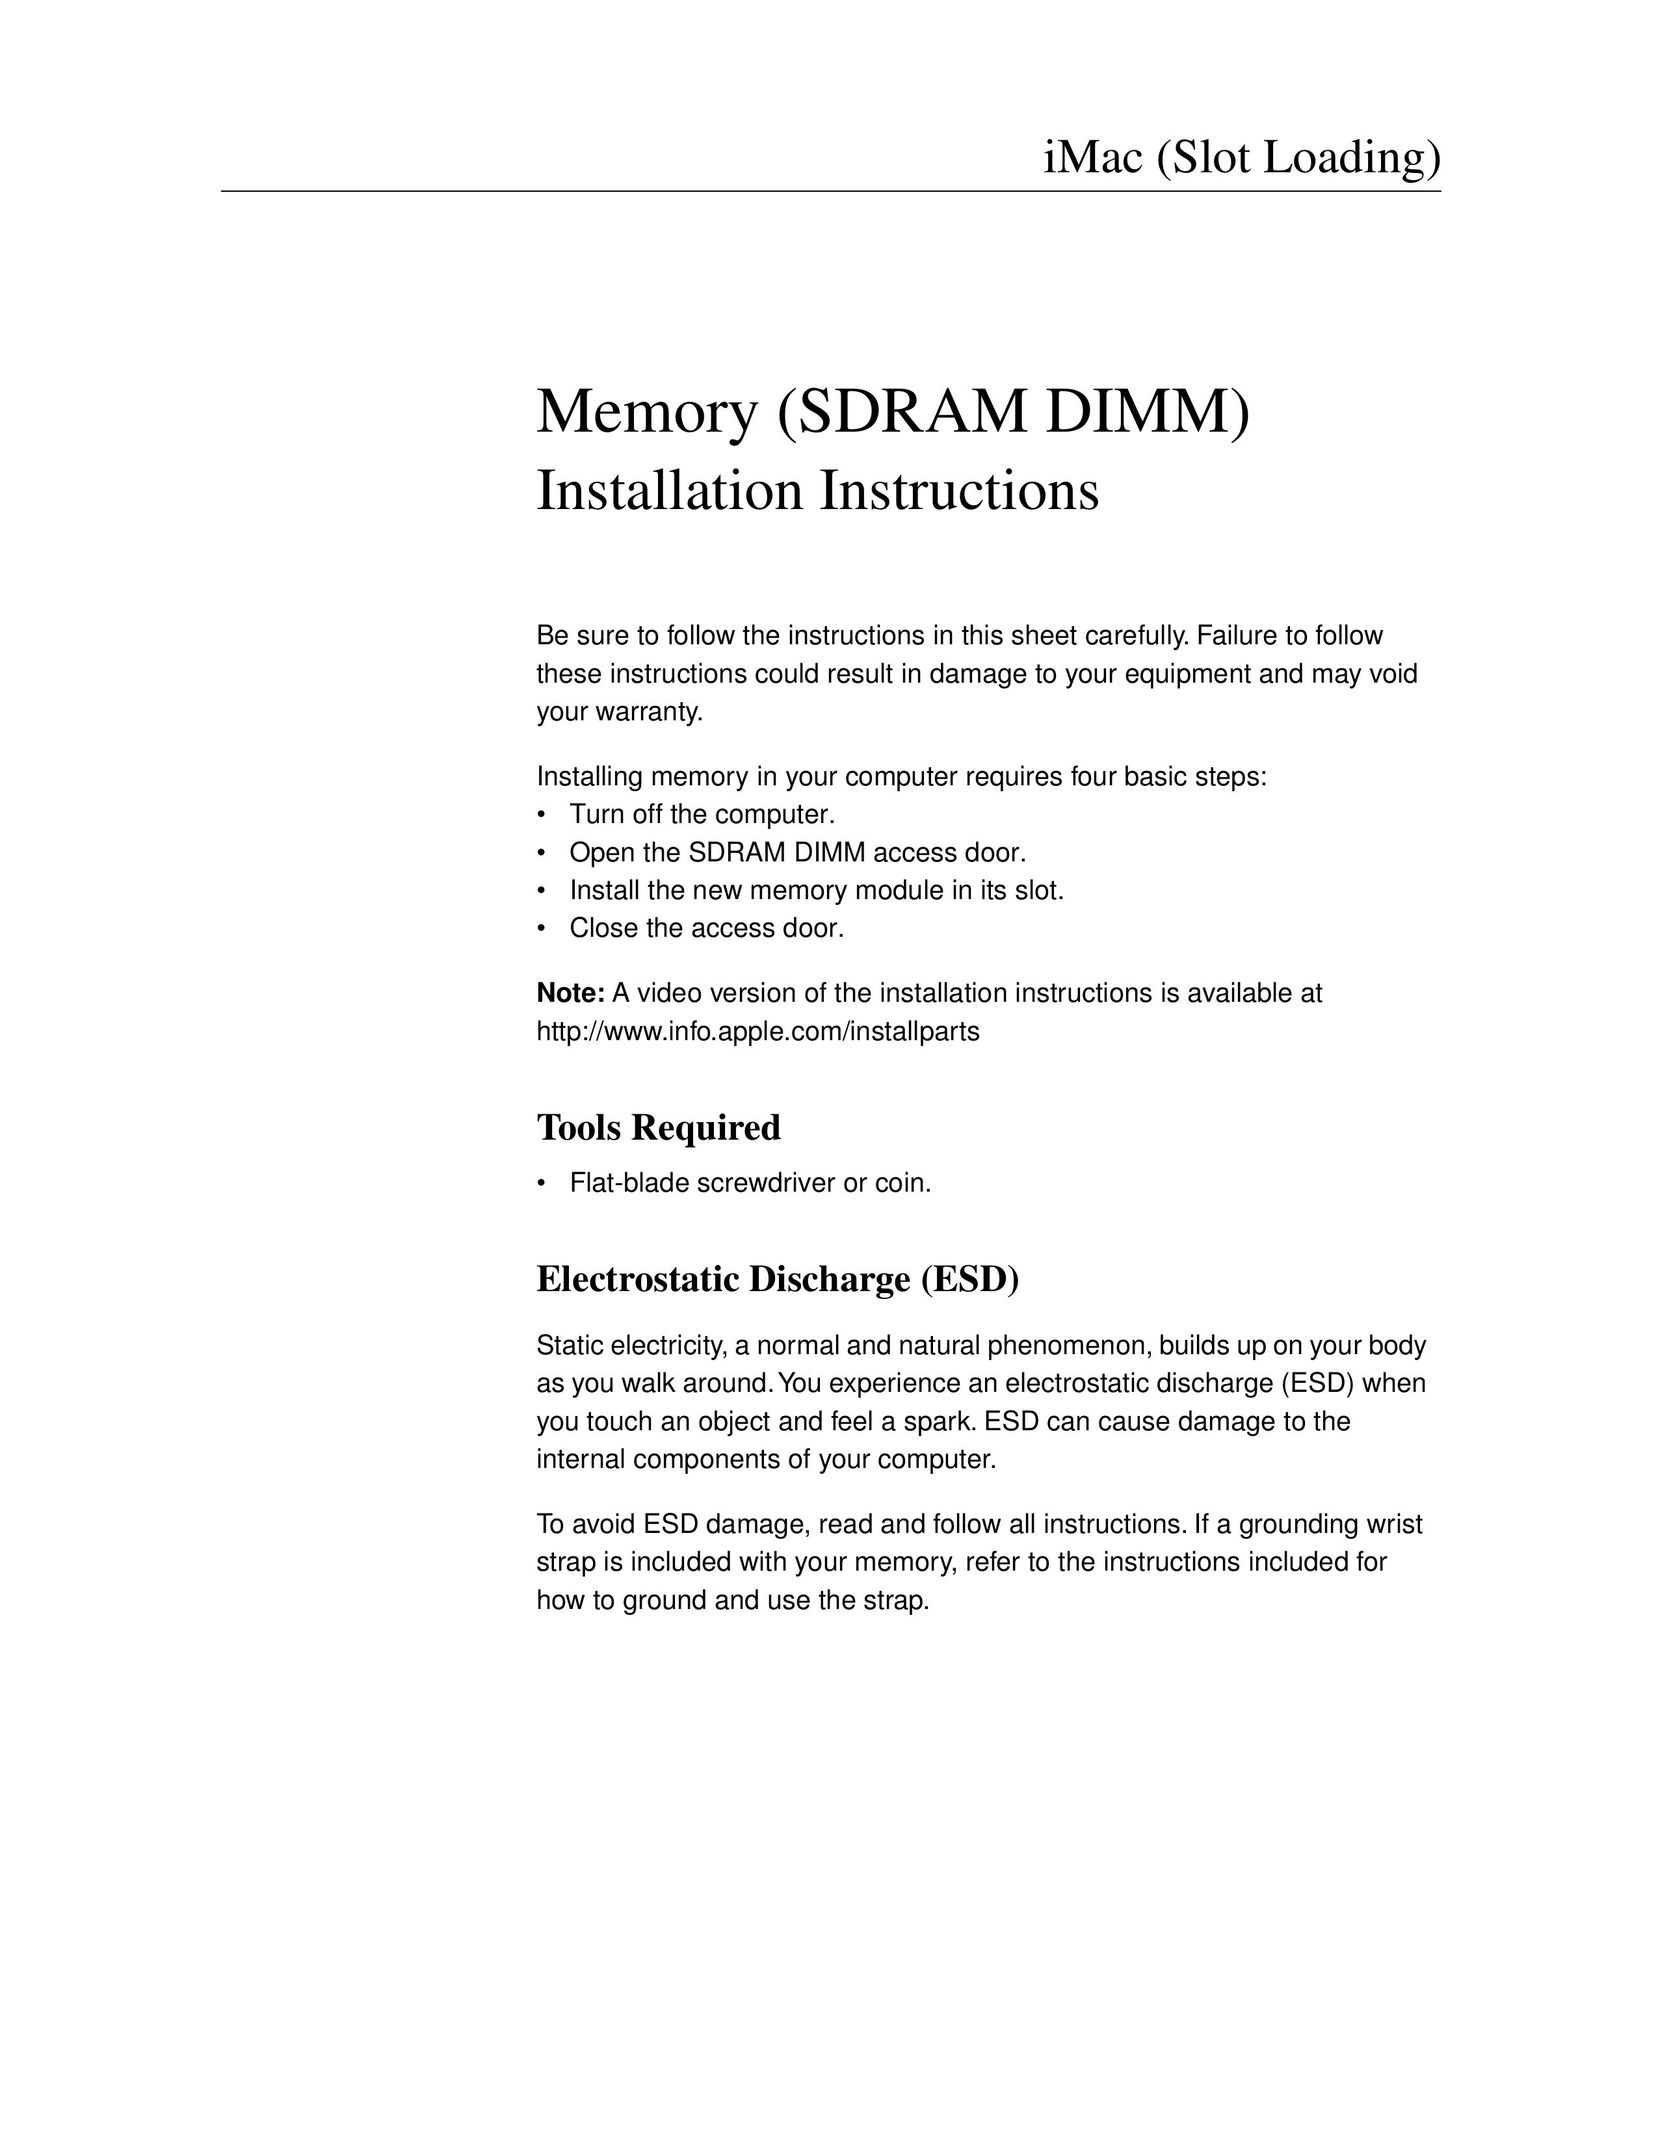 Apple SDRAM DIMM Computer Hardware User Manual